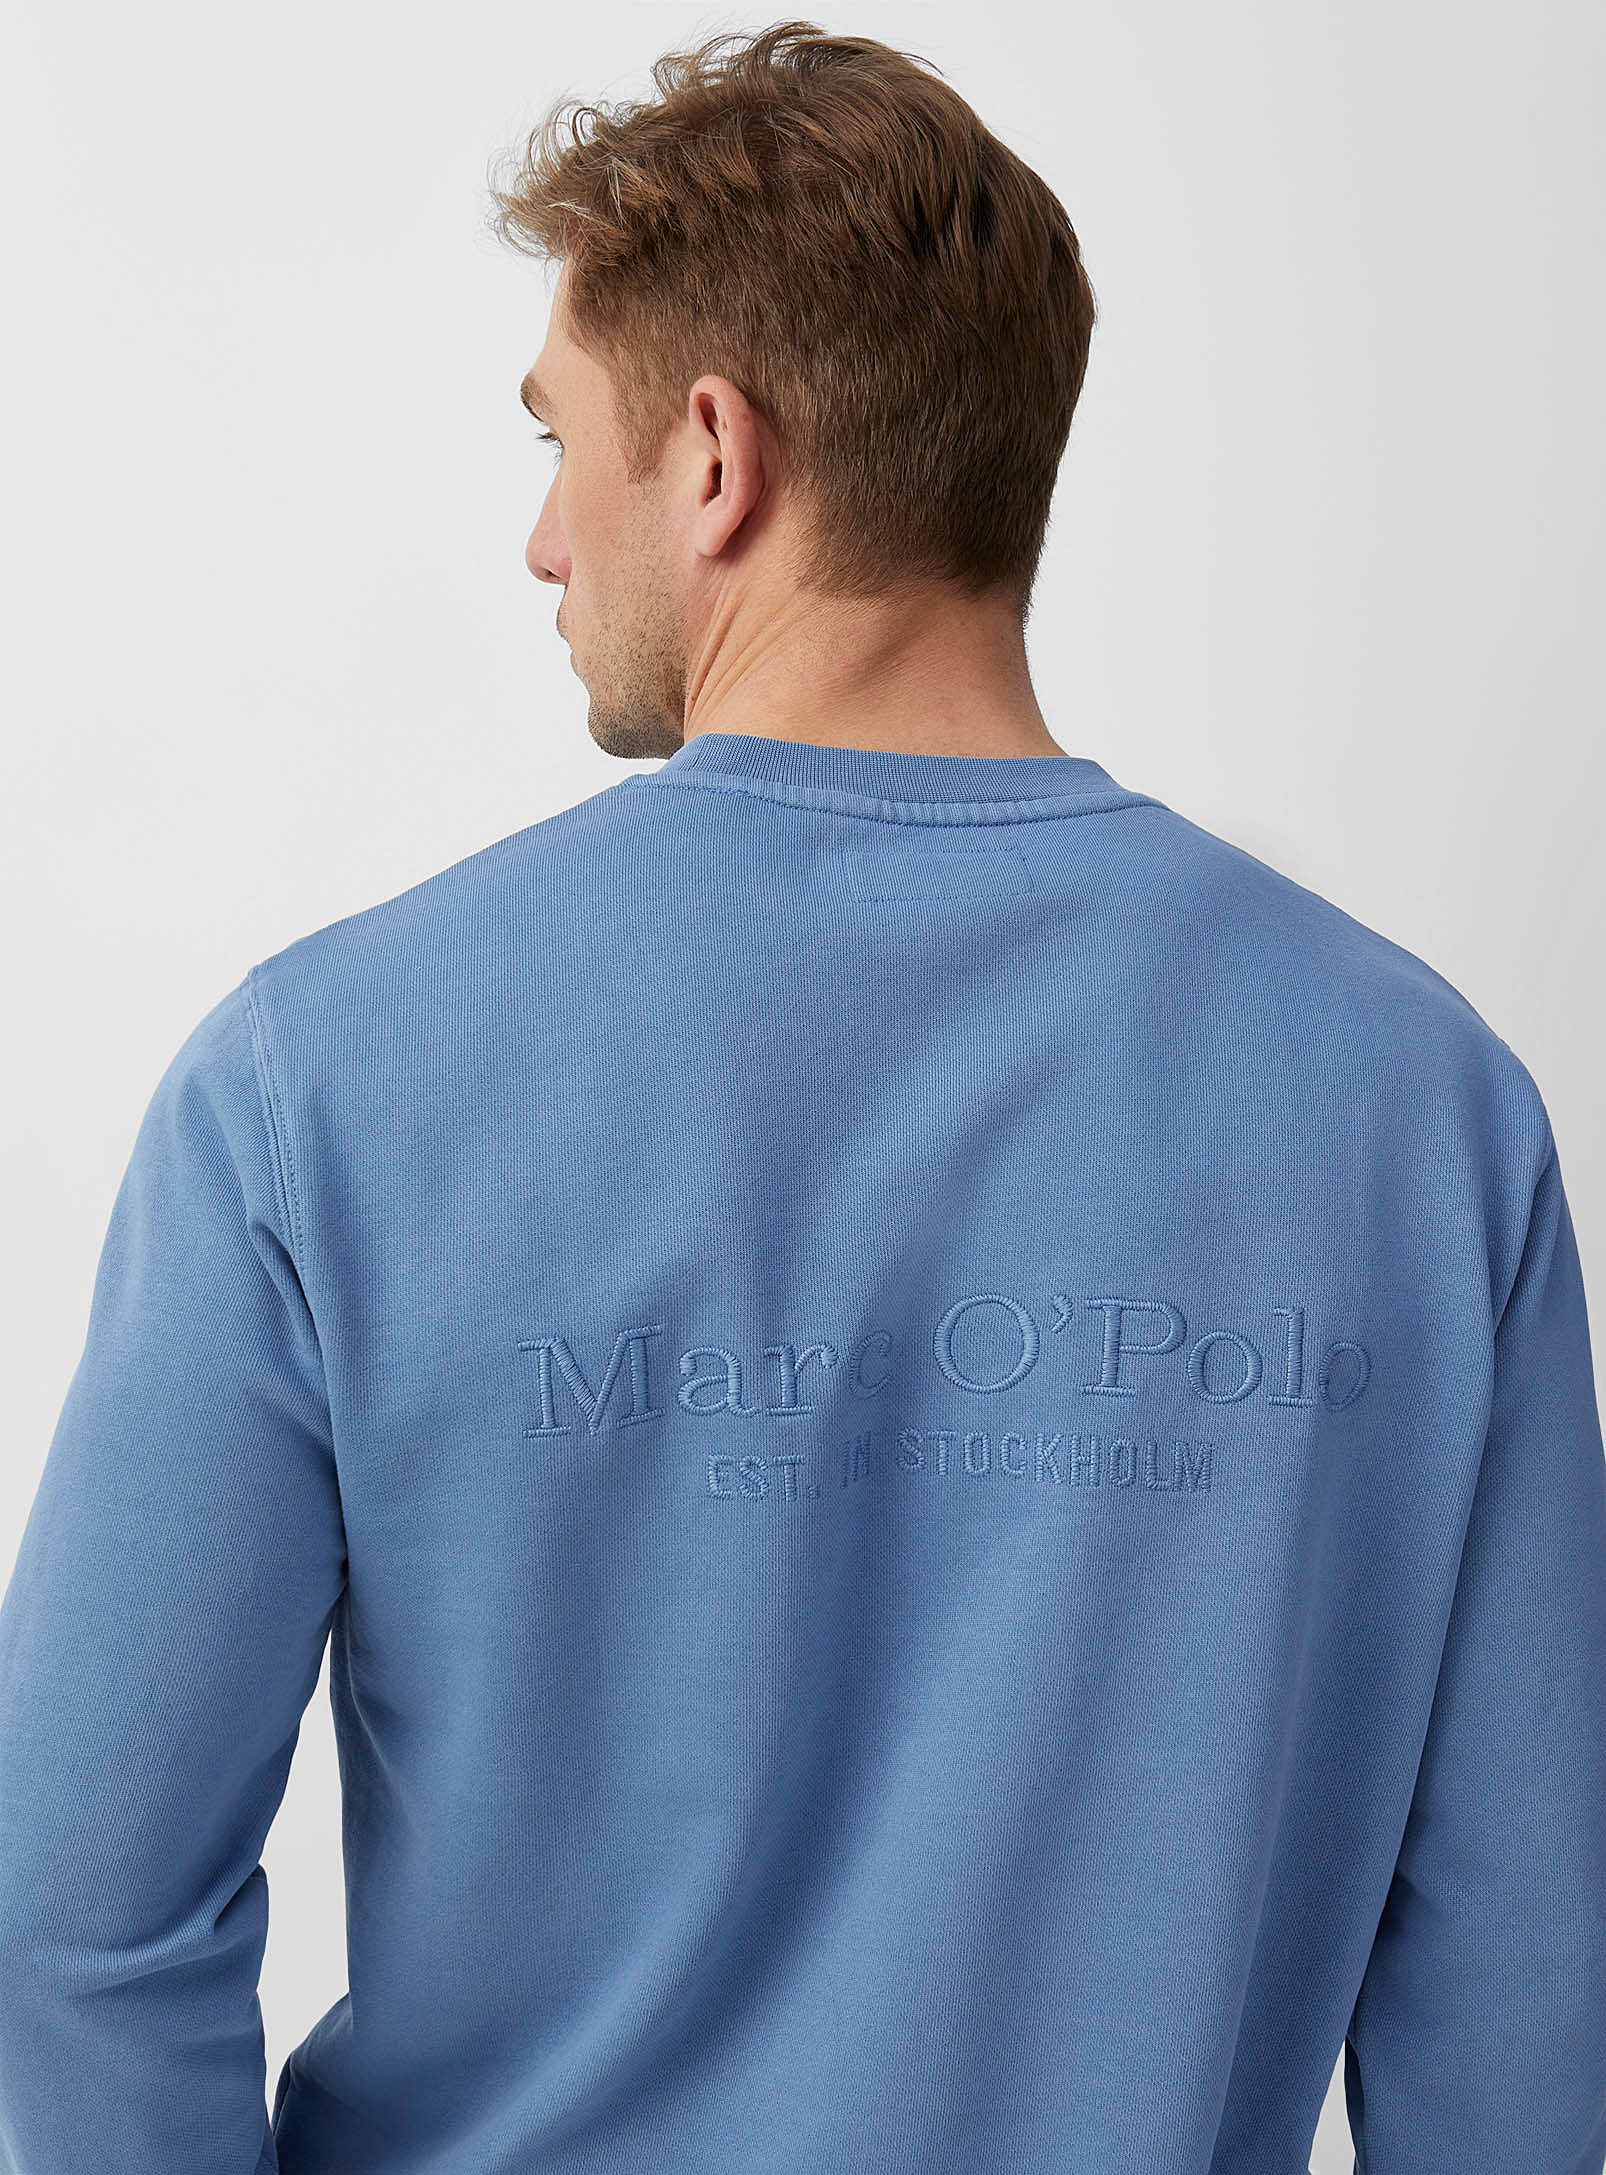 Marc O'Polo Shirt - Men's Embroidered logo sweatshirt